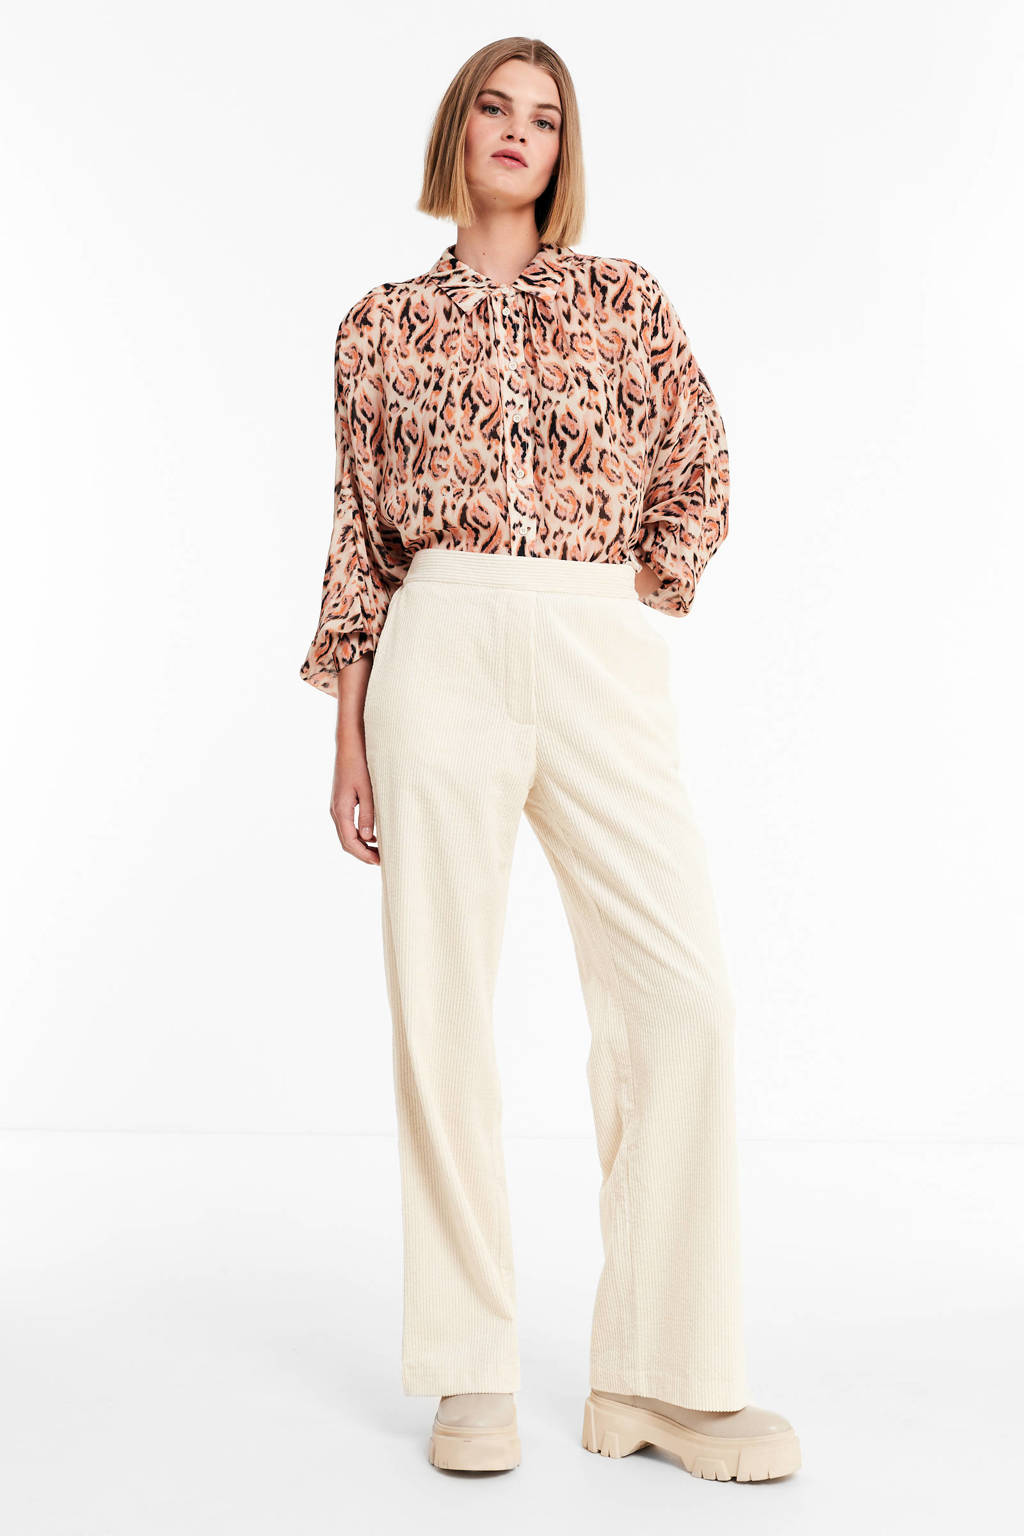 nogmaals Nadenkend maart Circle of Trust blouse Suzy blouse met all over print zand | wehkamp